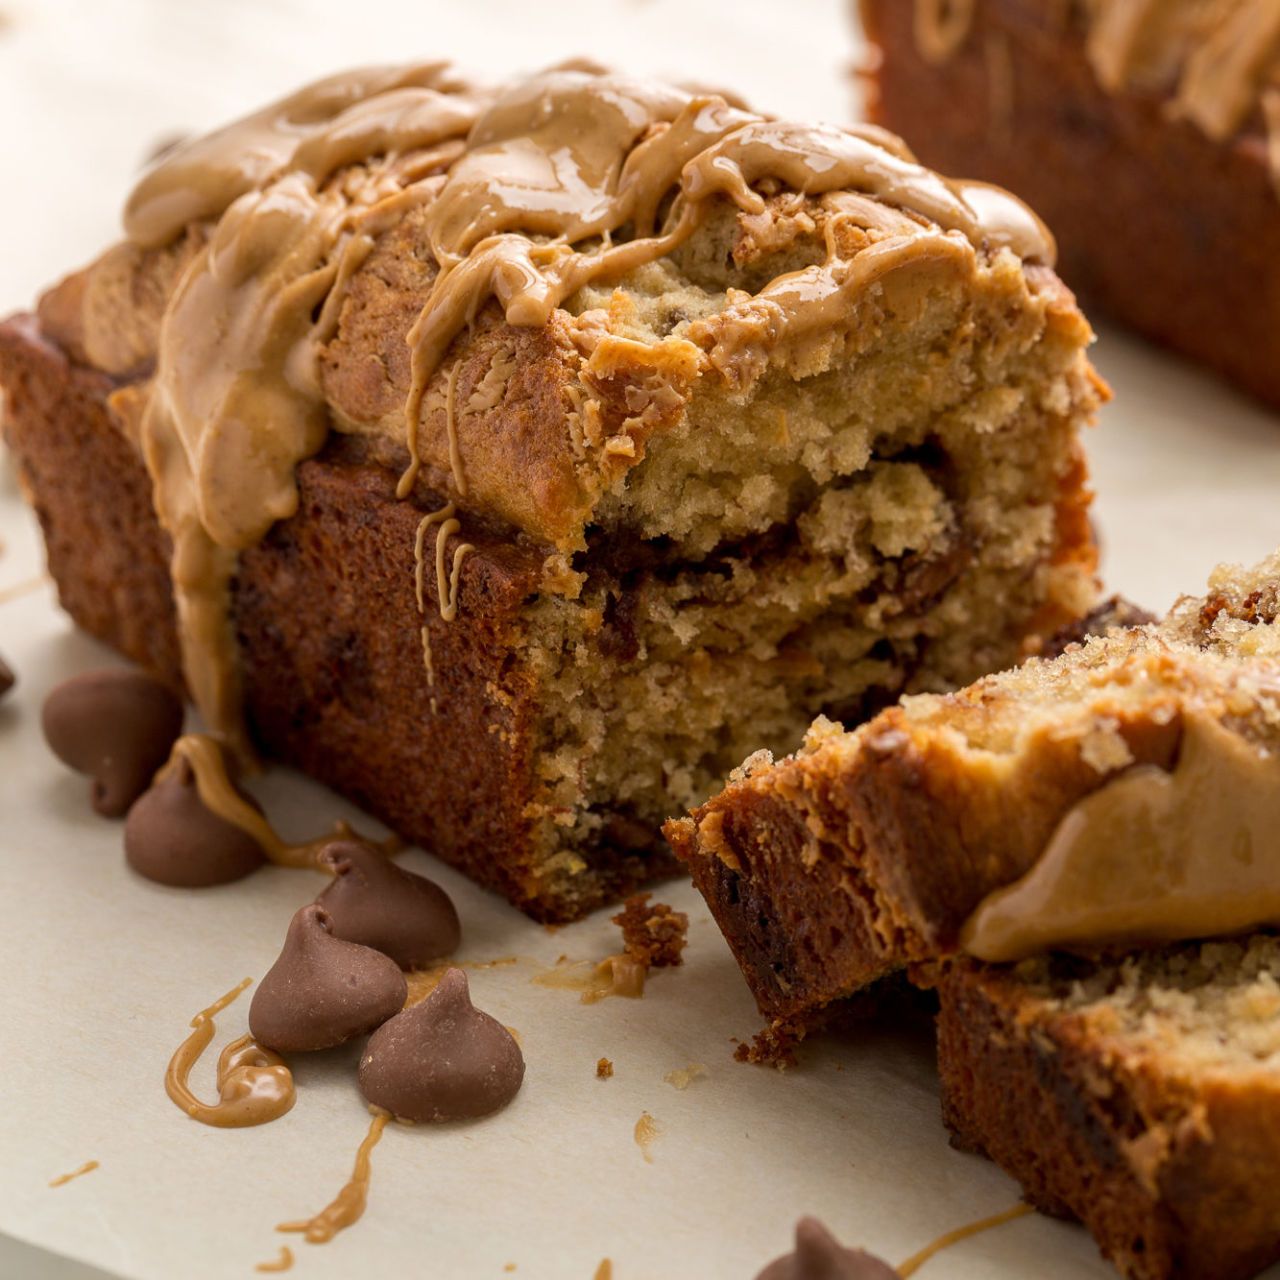 Chocolate Peanut Butter Banana Loaf - The Baking ChocolaTess